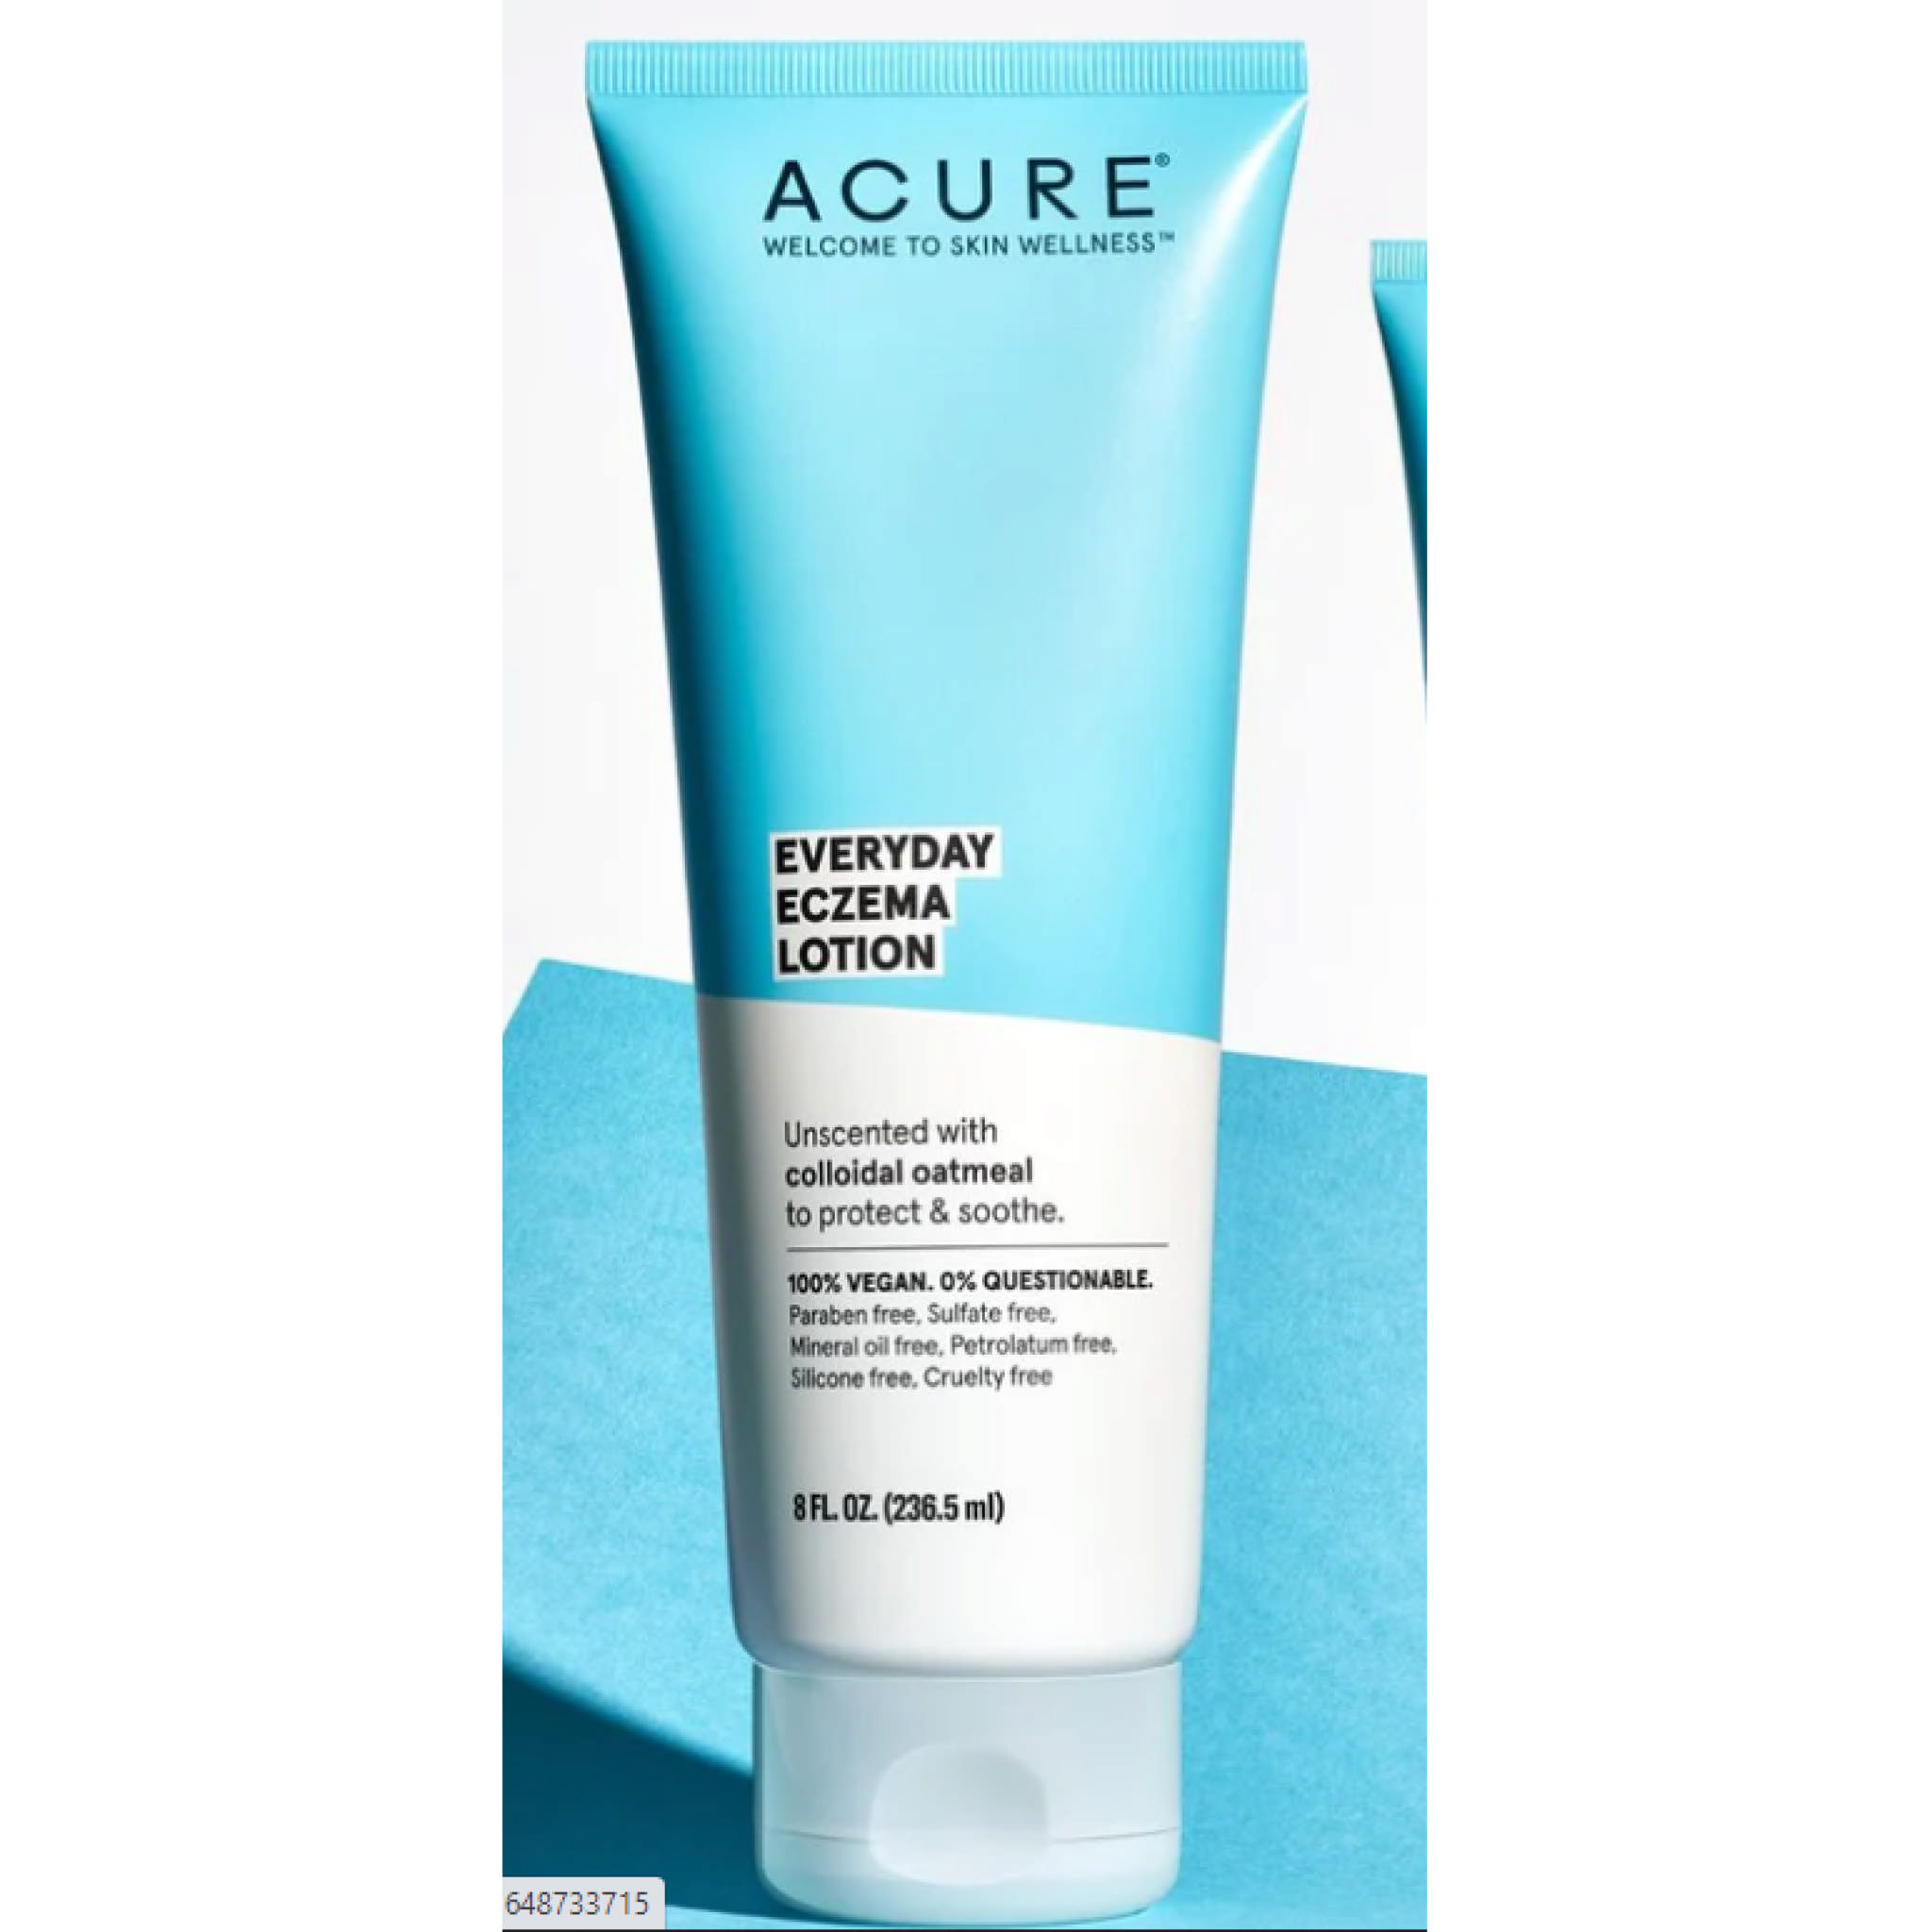 Acure Organics - Eczema Lotion Everyday